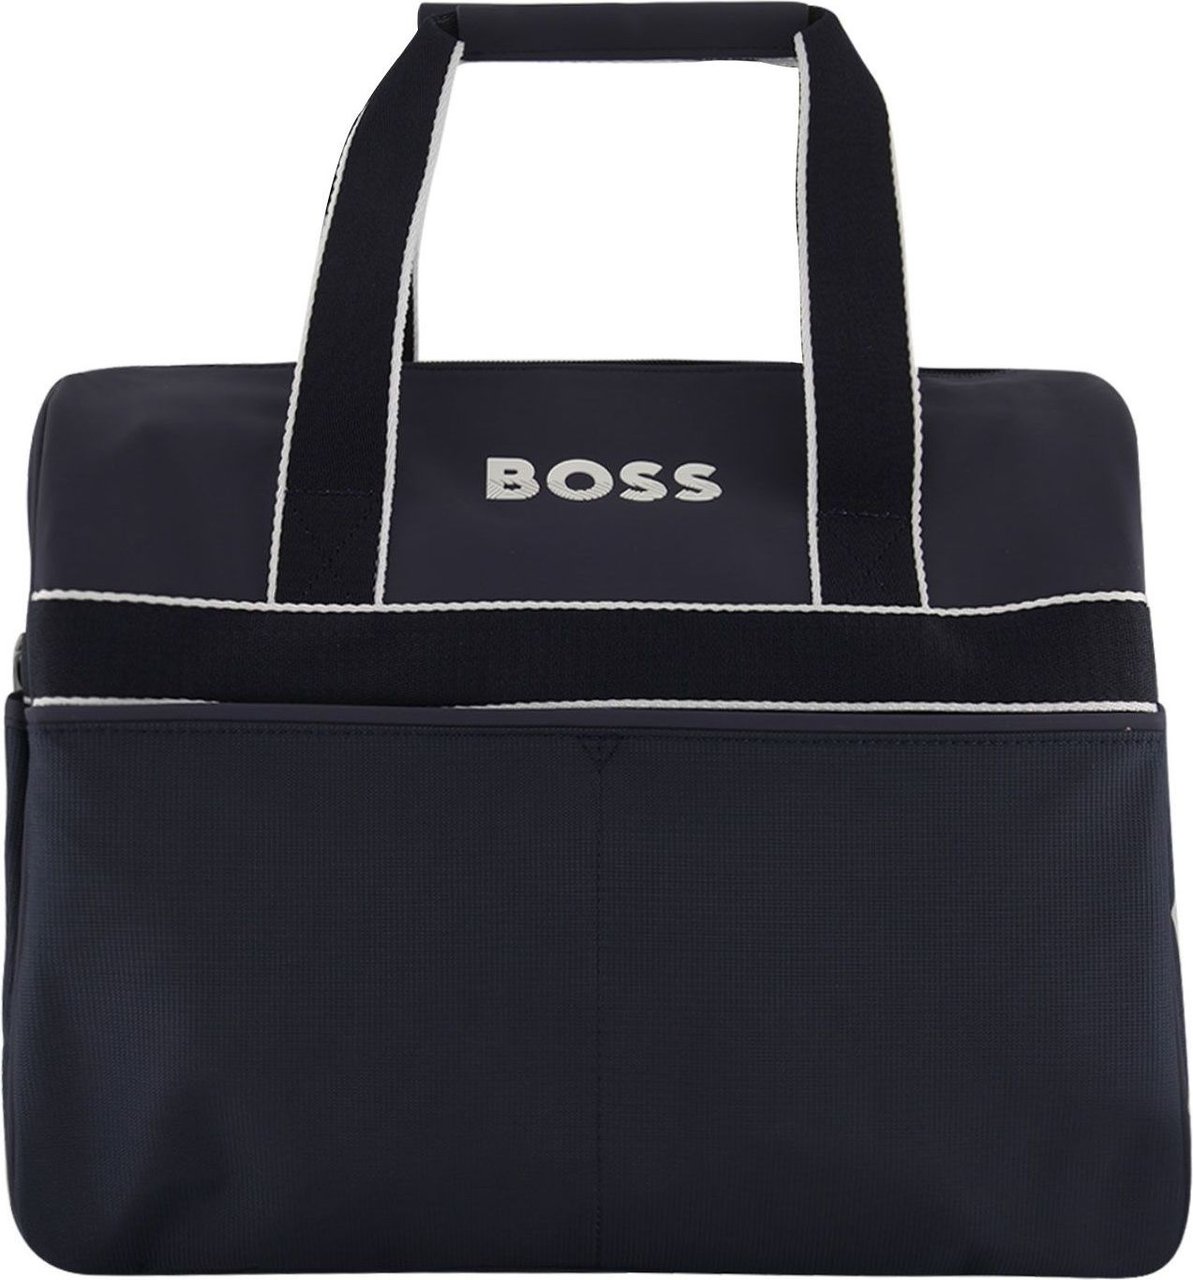 Hugo Boss Boss J90299 luiertas navy Blauw